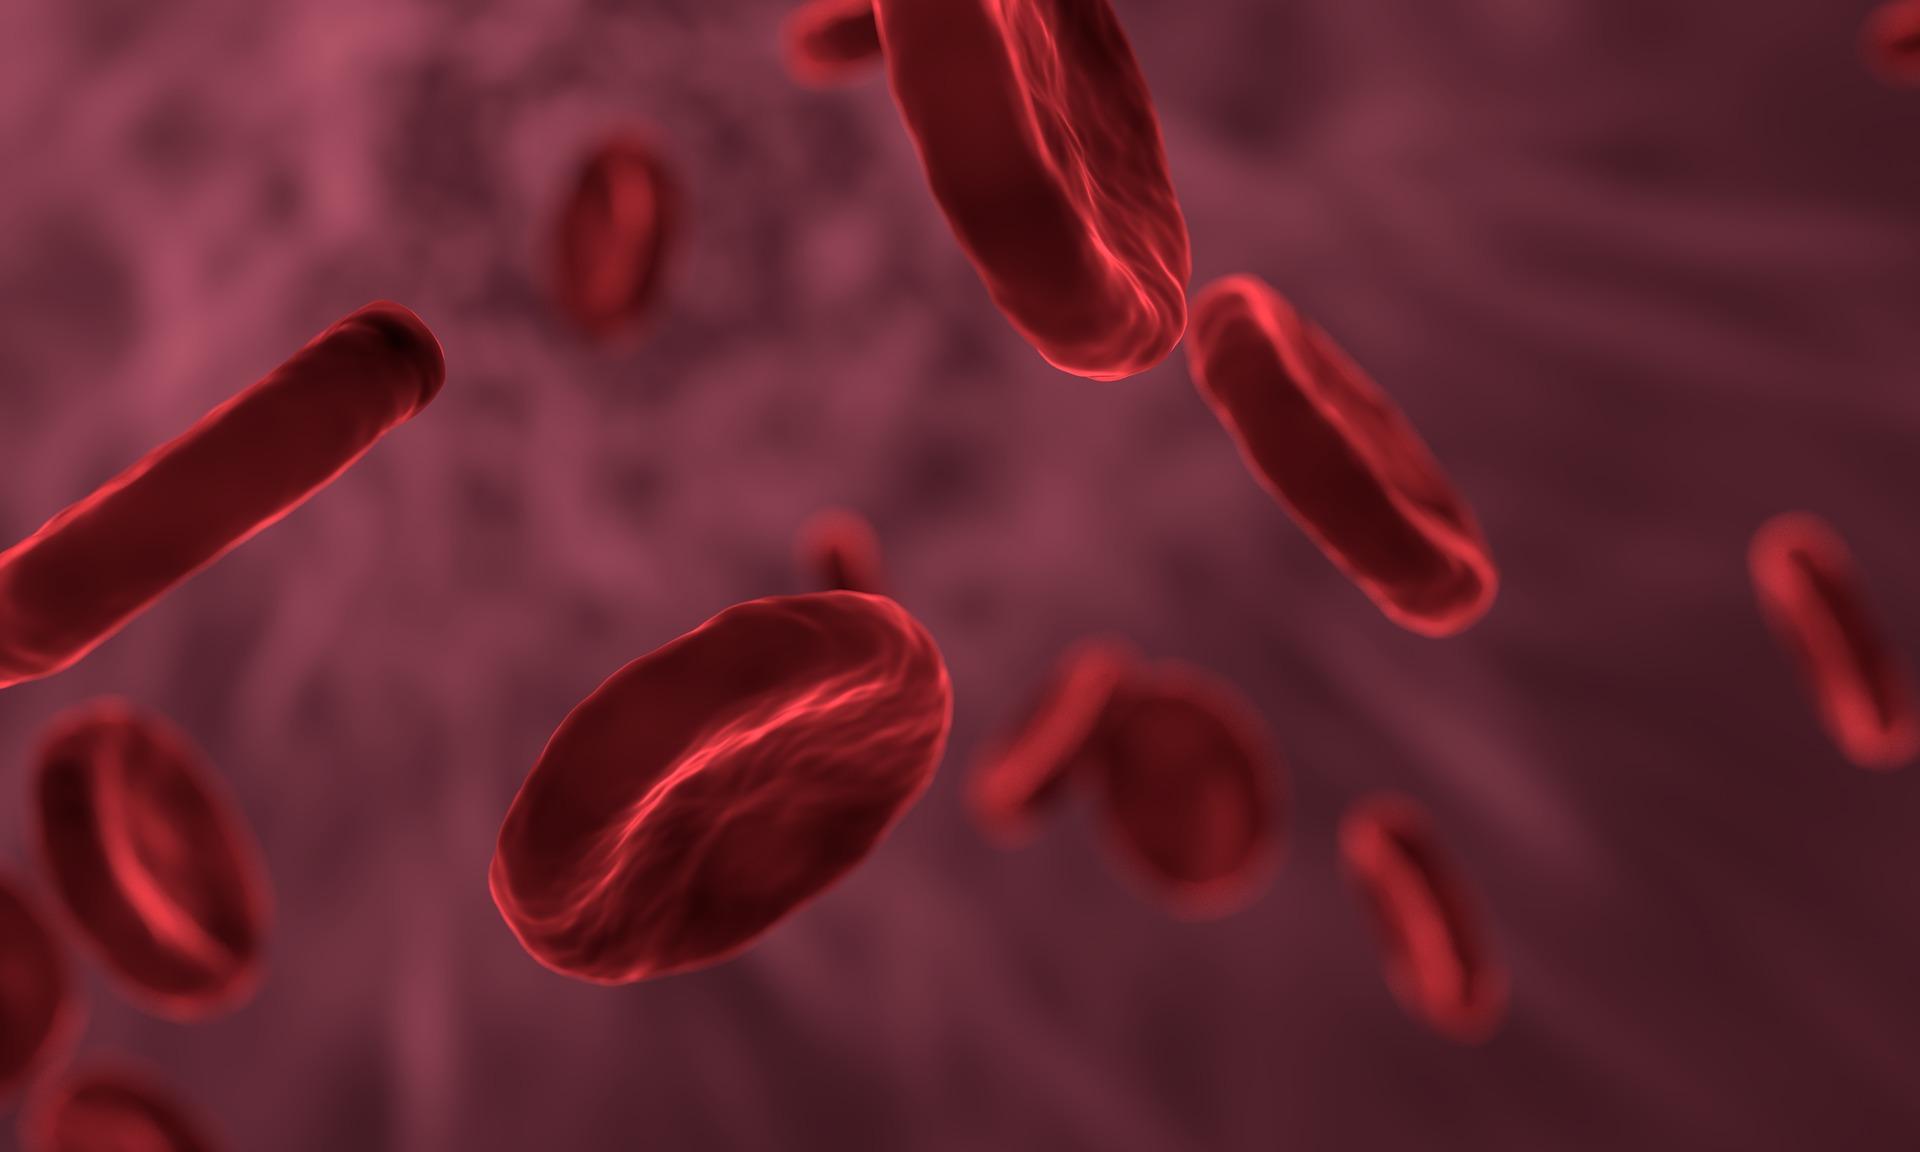 red-blood-cells-3188223_1920.jpg